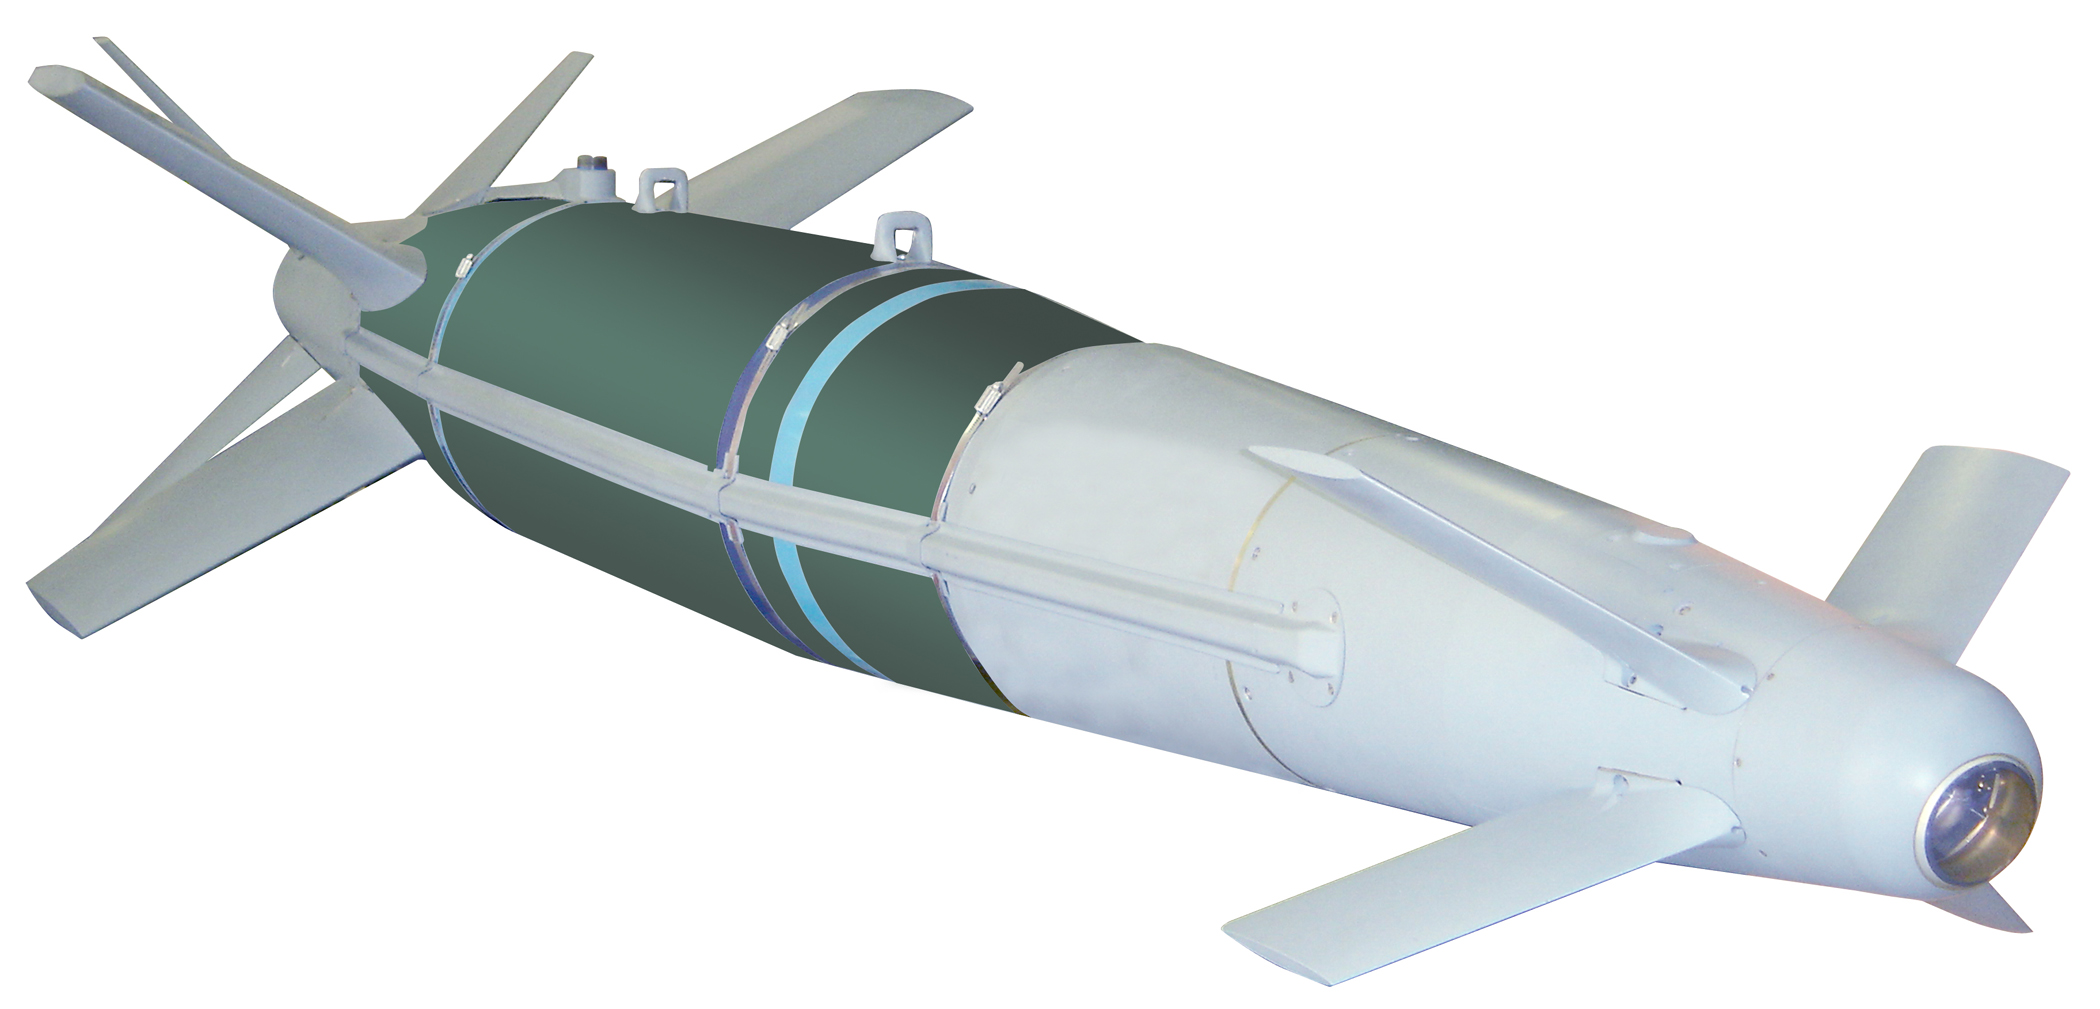 Lockheed Adds Some Israeli SPICE To Kinetics Market - Breaking Defense